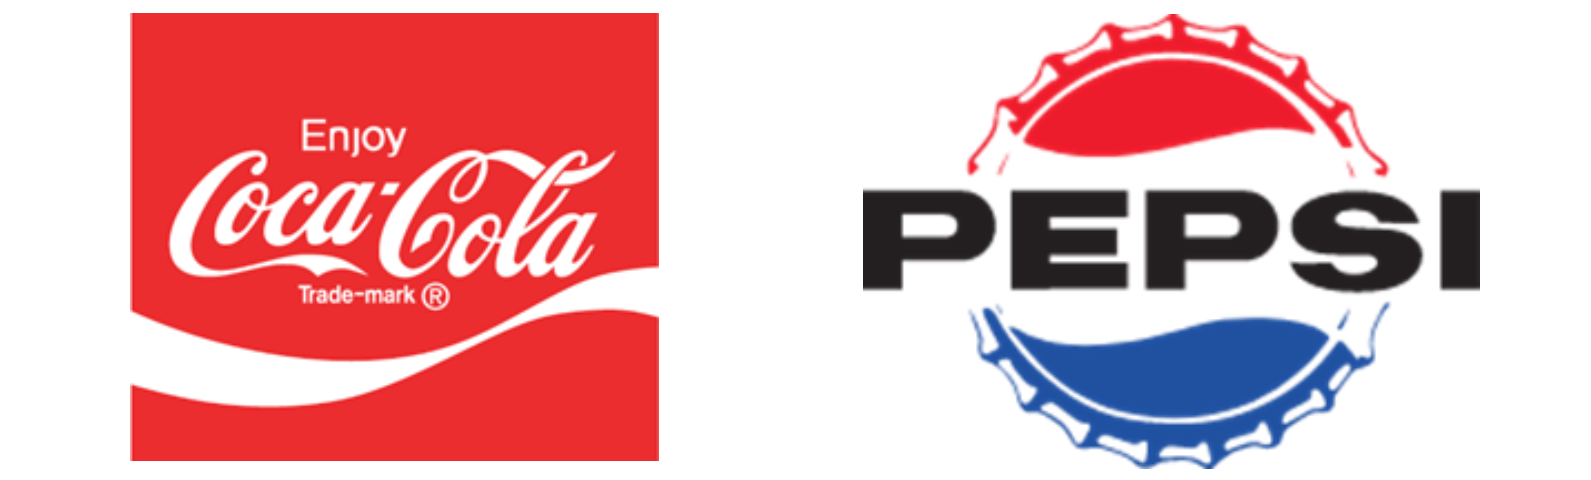 Coca-Cola and Pepsi-Cola logos in 60s